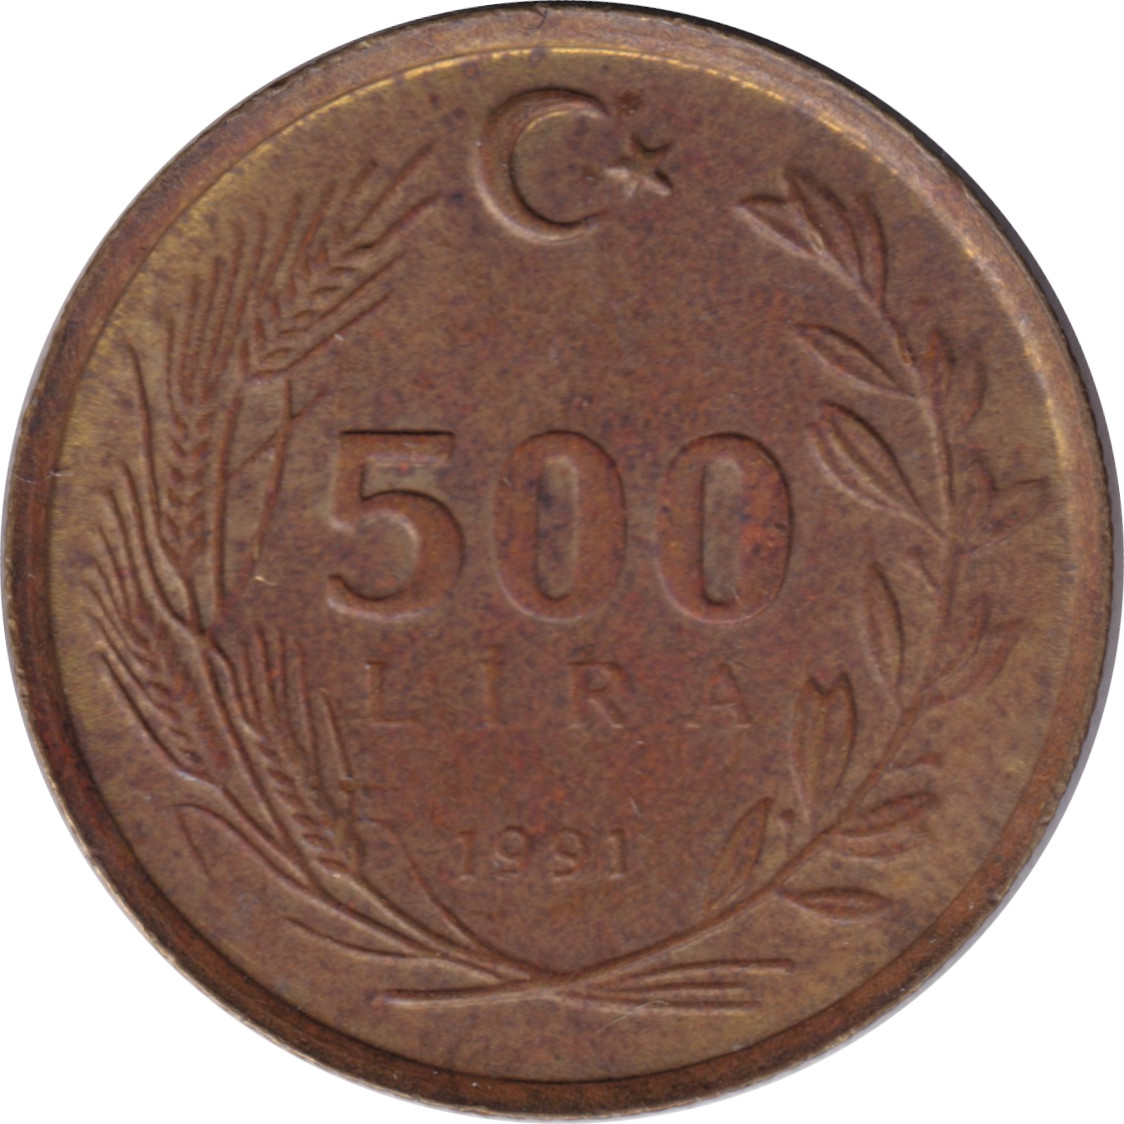 500 lira - Moustafa Kemal